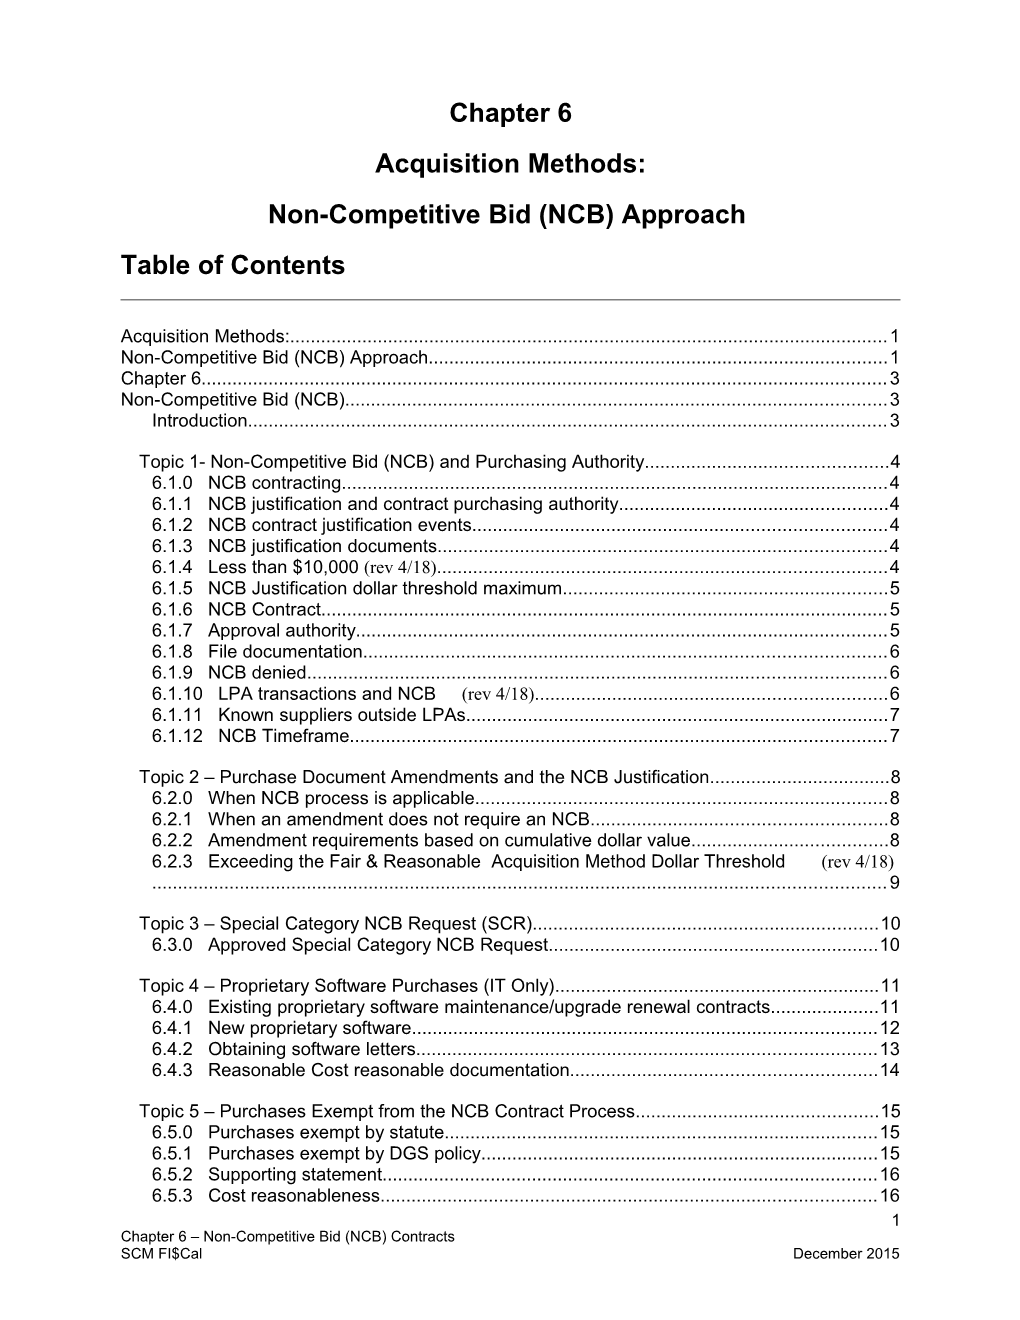 Non-Competitive Bid (NCB) Approach